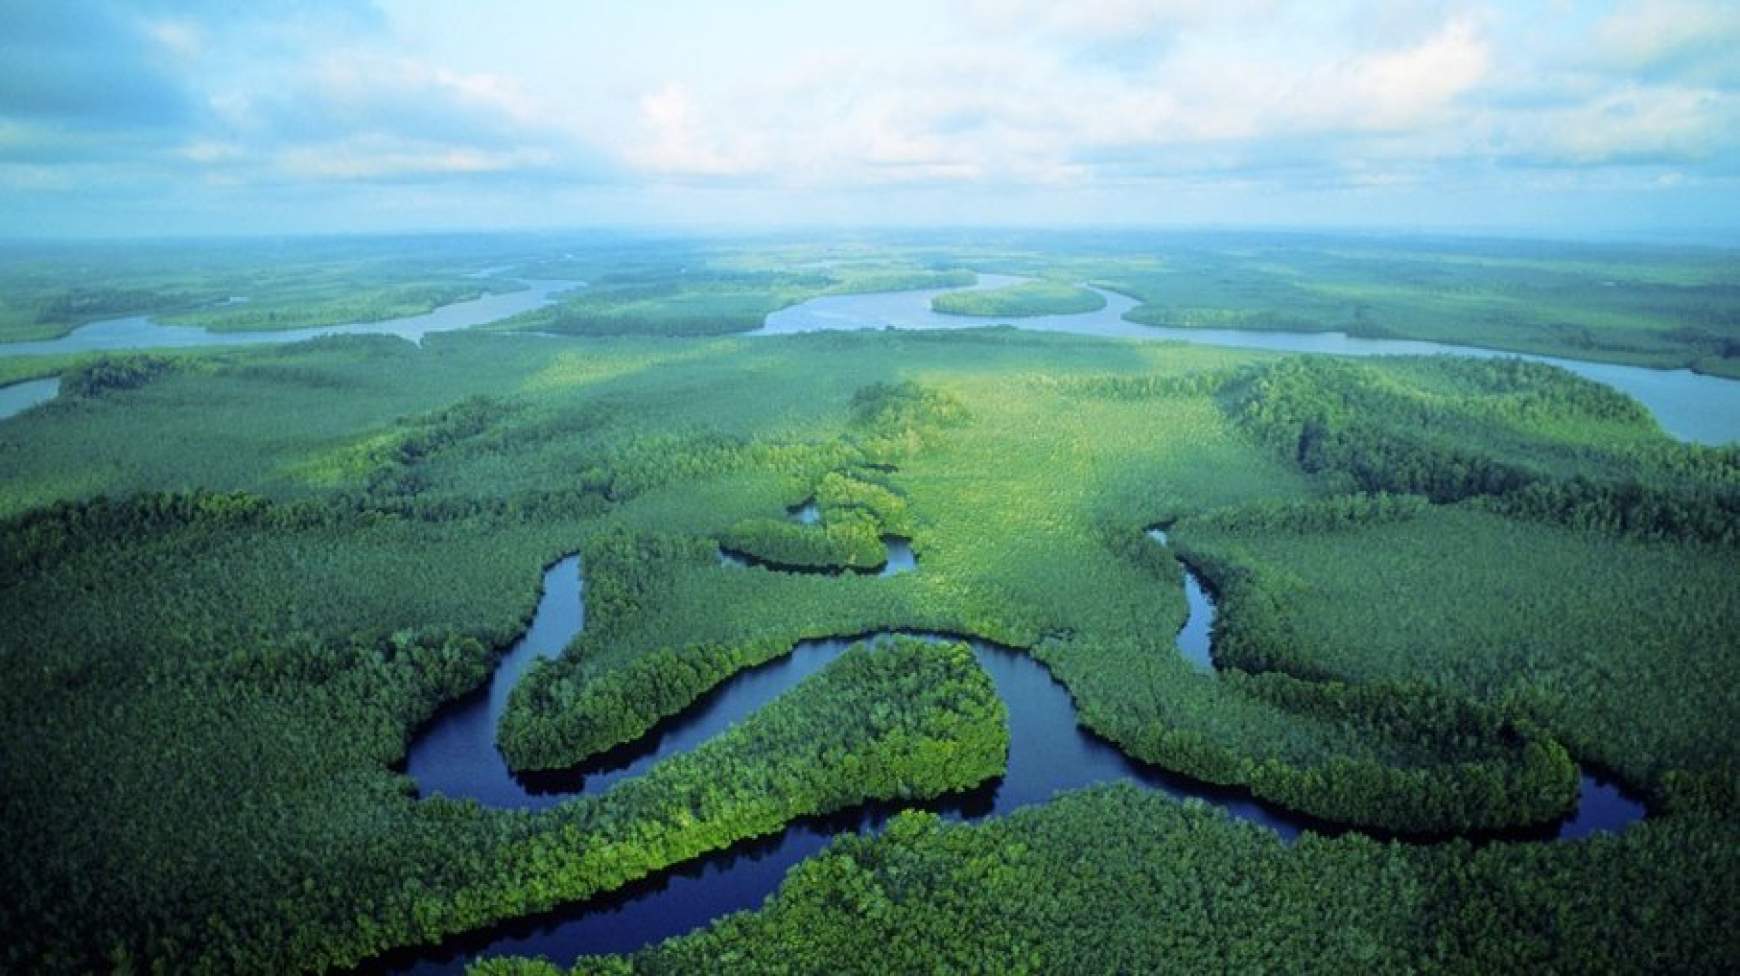 Реки и озера кубы. Река Конго в Африке. Впадина Конго. Бассейн реки Конго. Долина реки Конго.